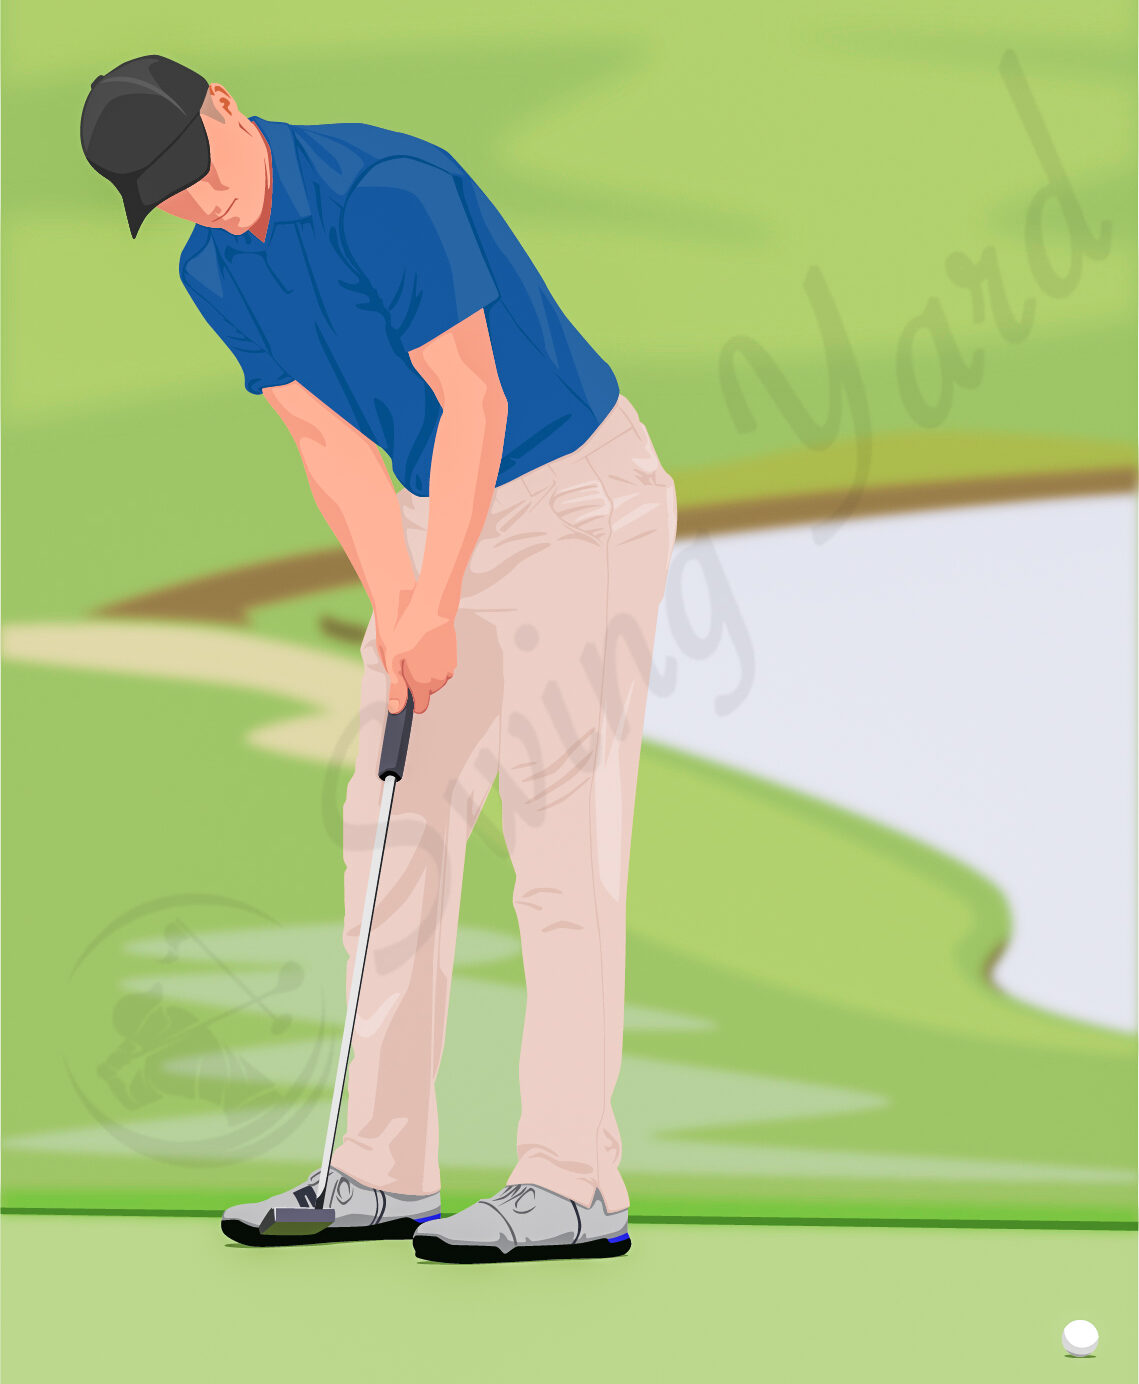 golfer using a cross handed putting grip